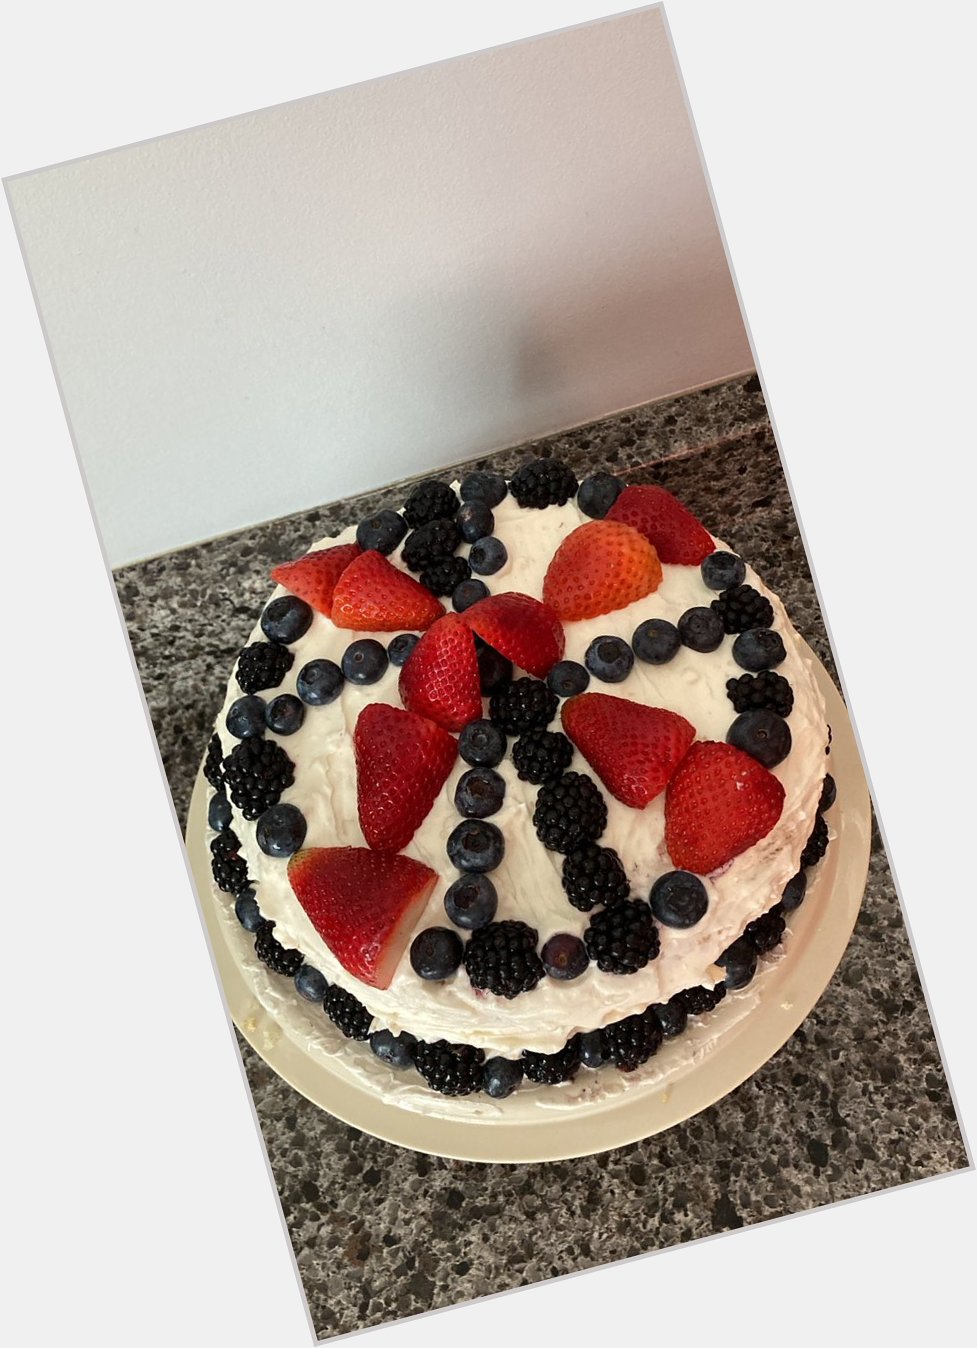 Happy birthday common sense. i made this cake to celebrate two years of common sense   